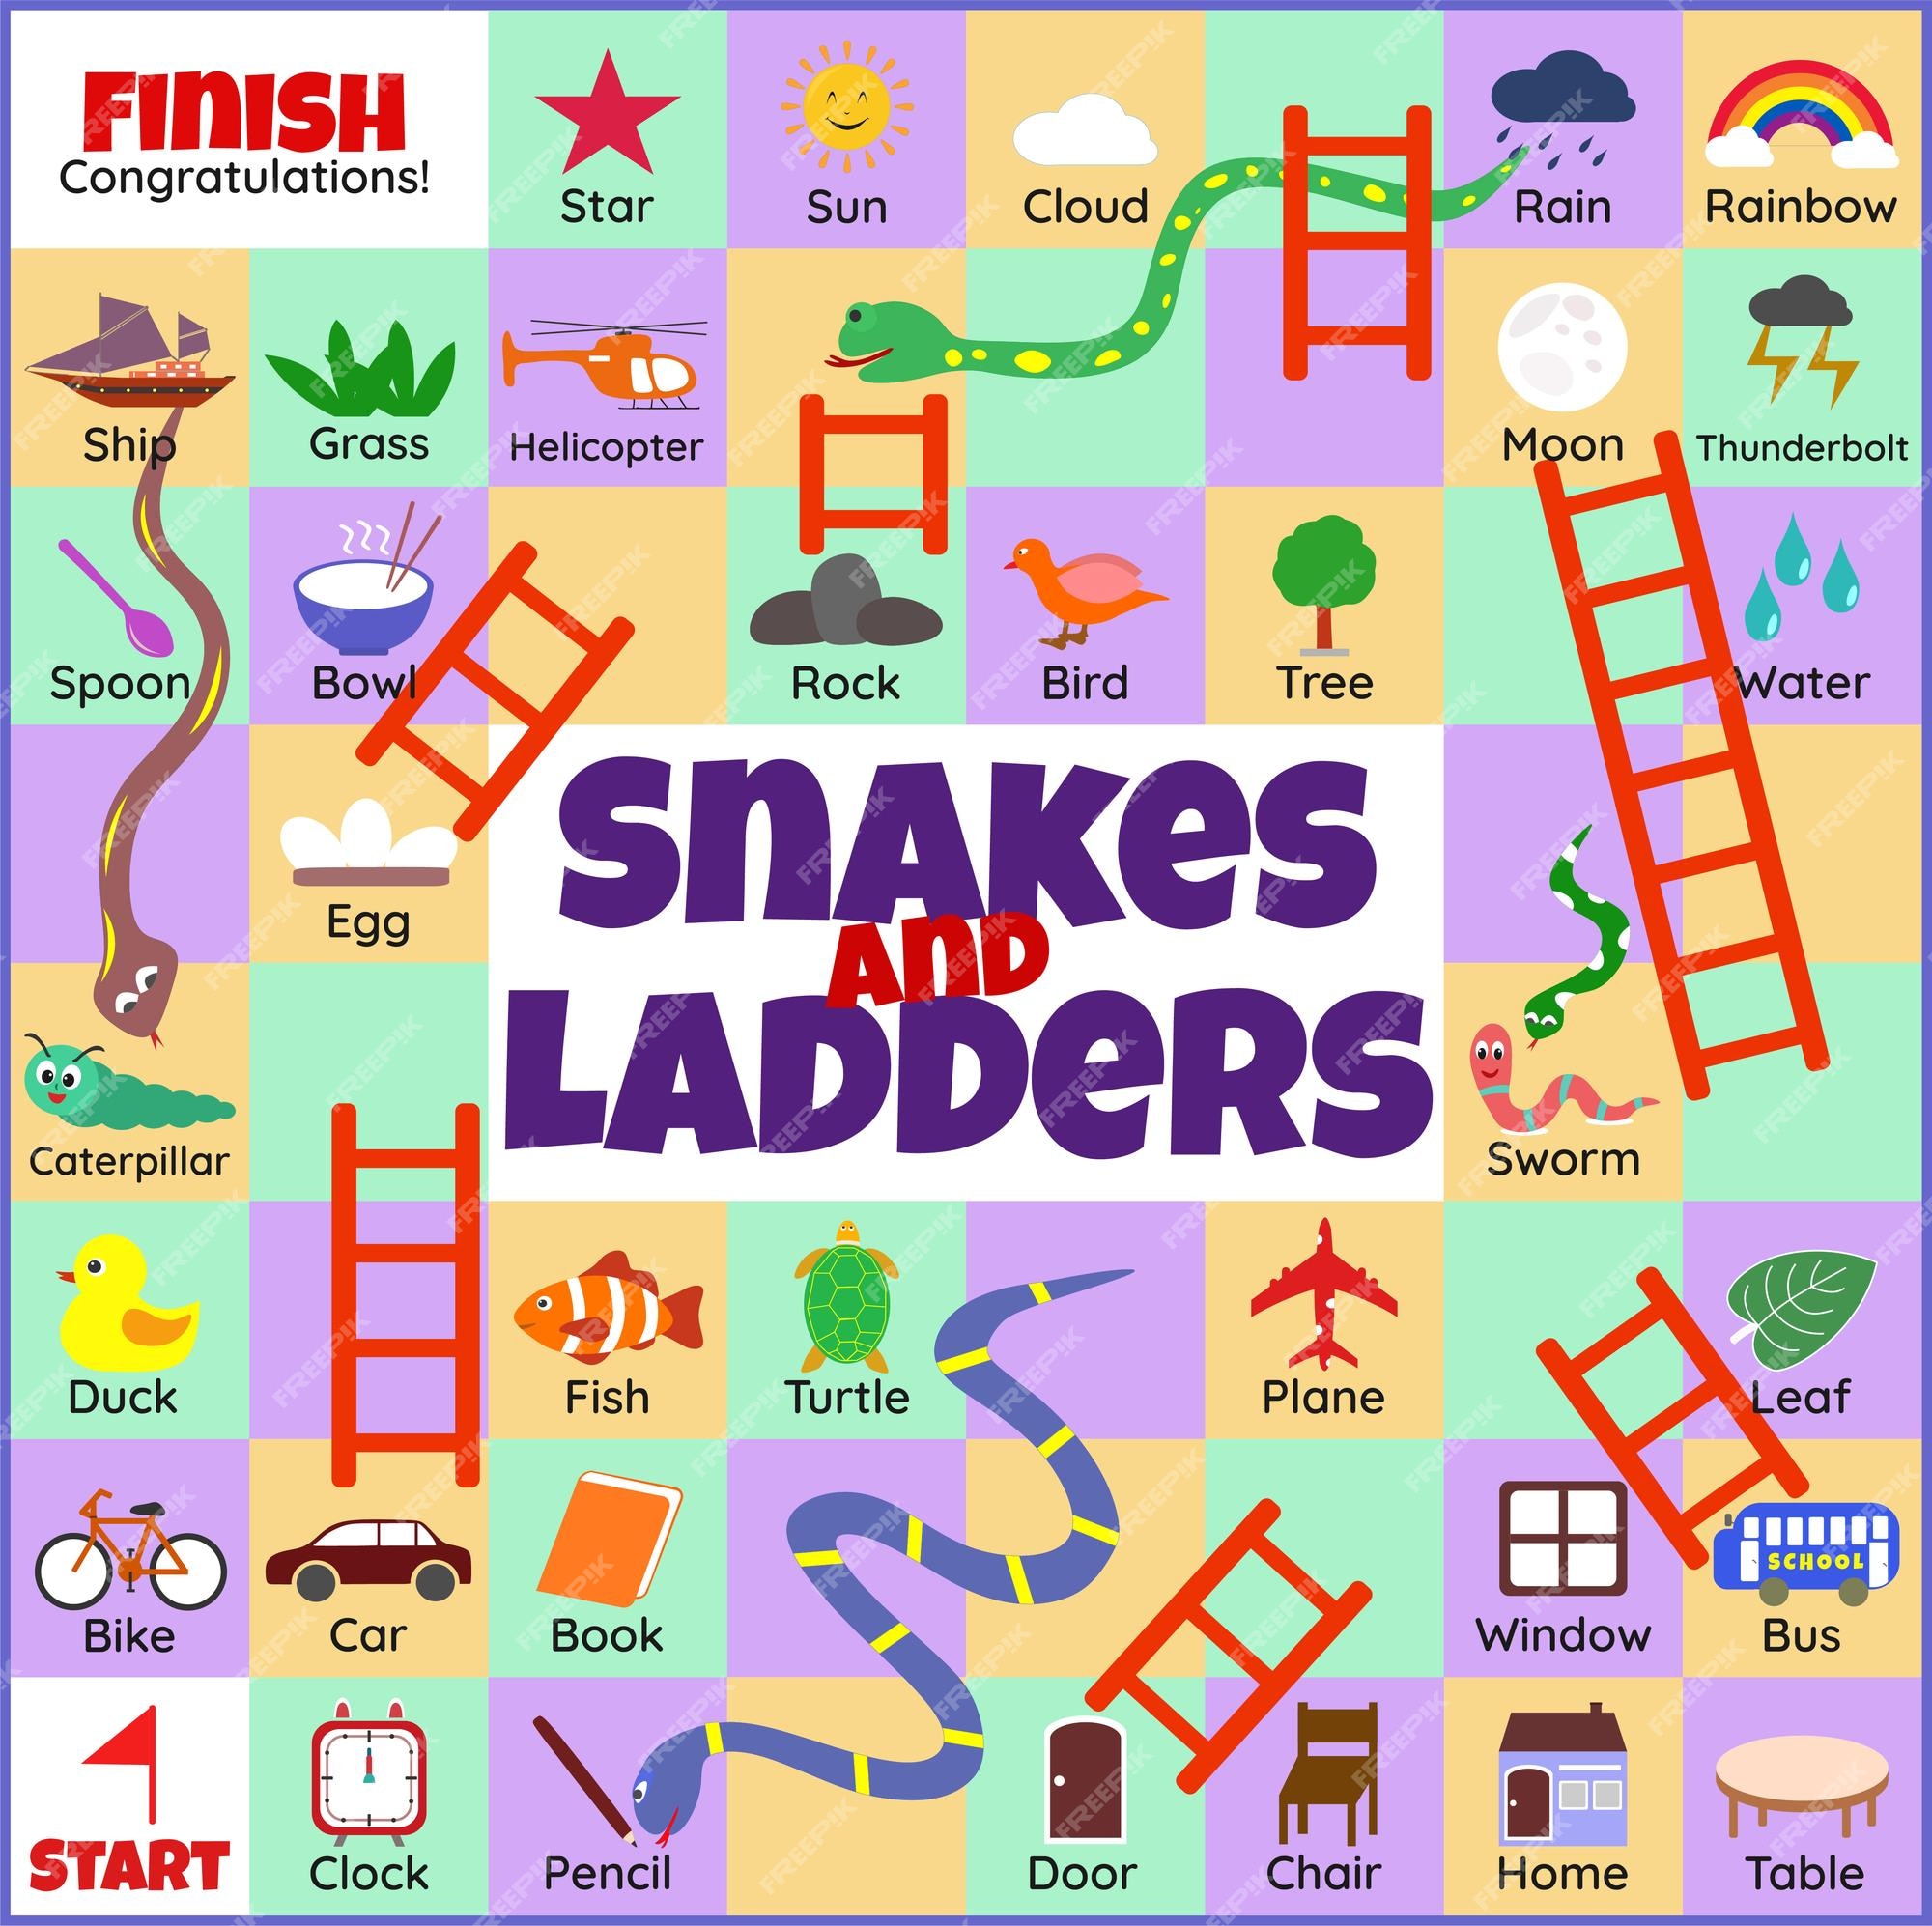 Jogo de tabuleiro snakes and ladders para atividade educacional